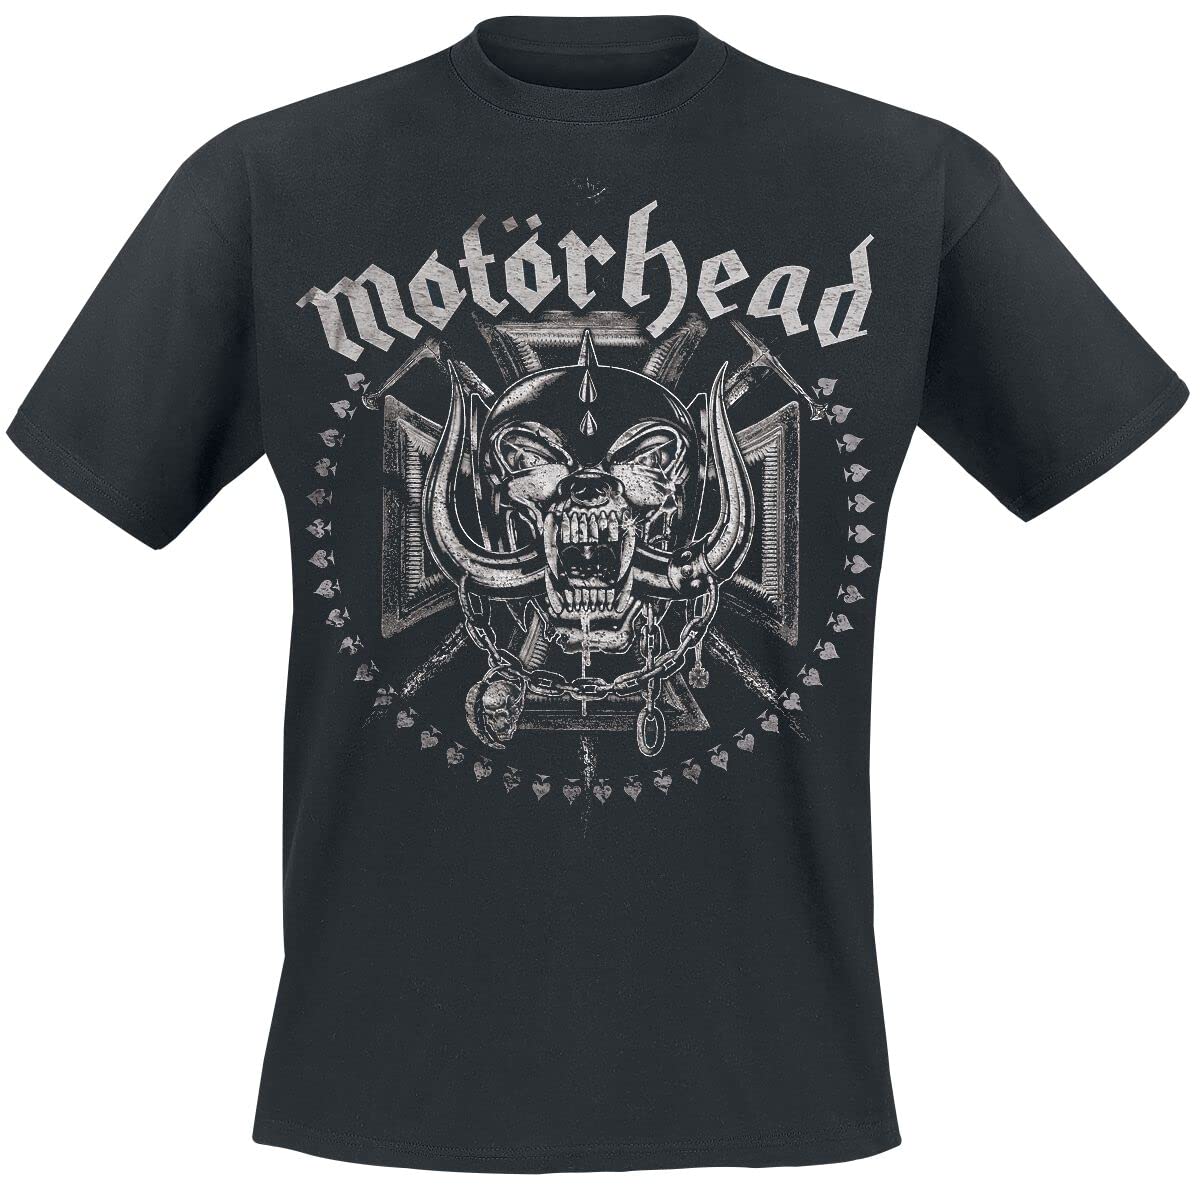 Motörhead Iron Cross Swords Männer T-Shirt schwarz M 100% Baumwolle Band-Merch, Bands, Nachhaltigkeit